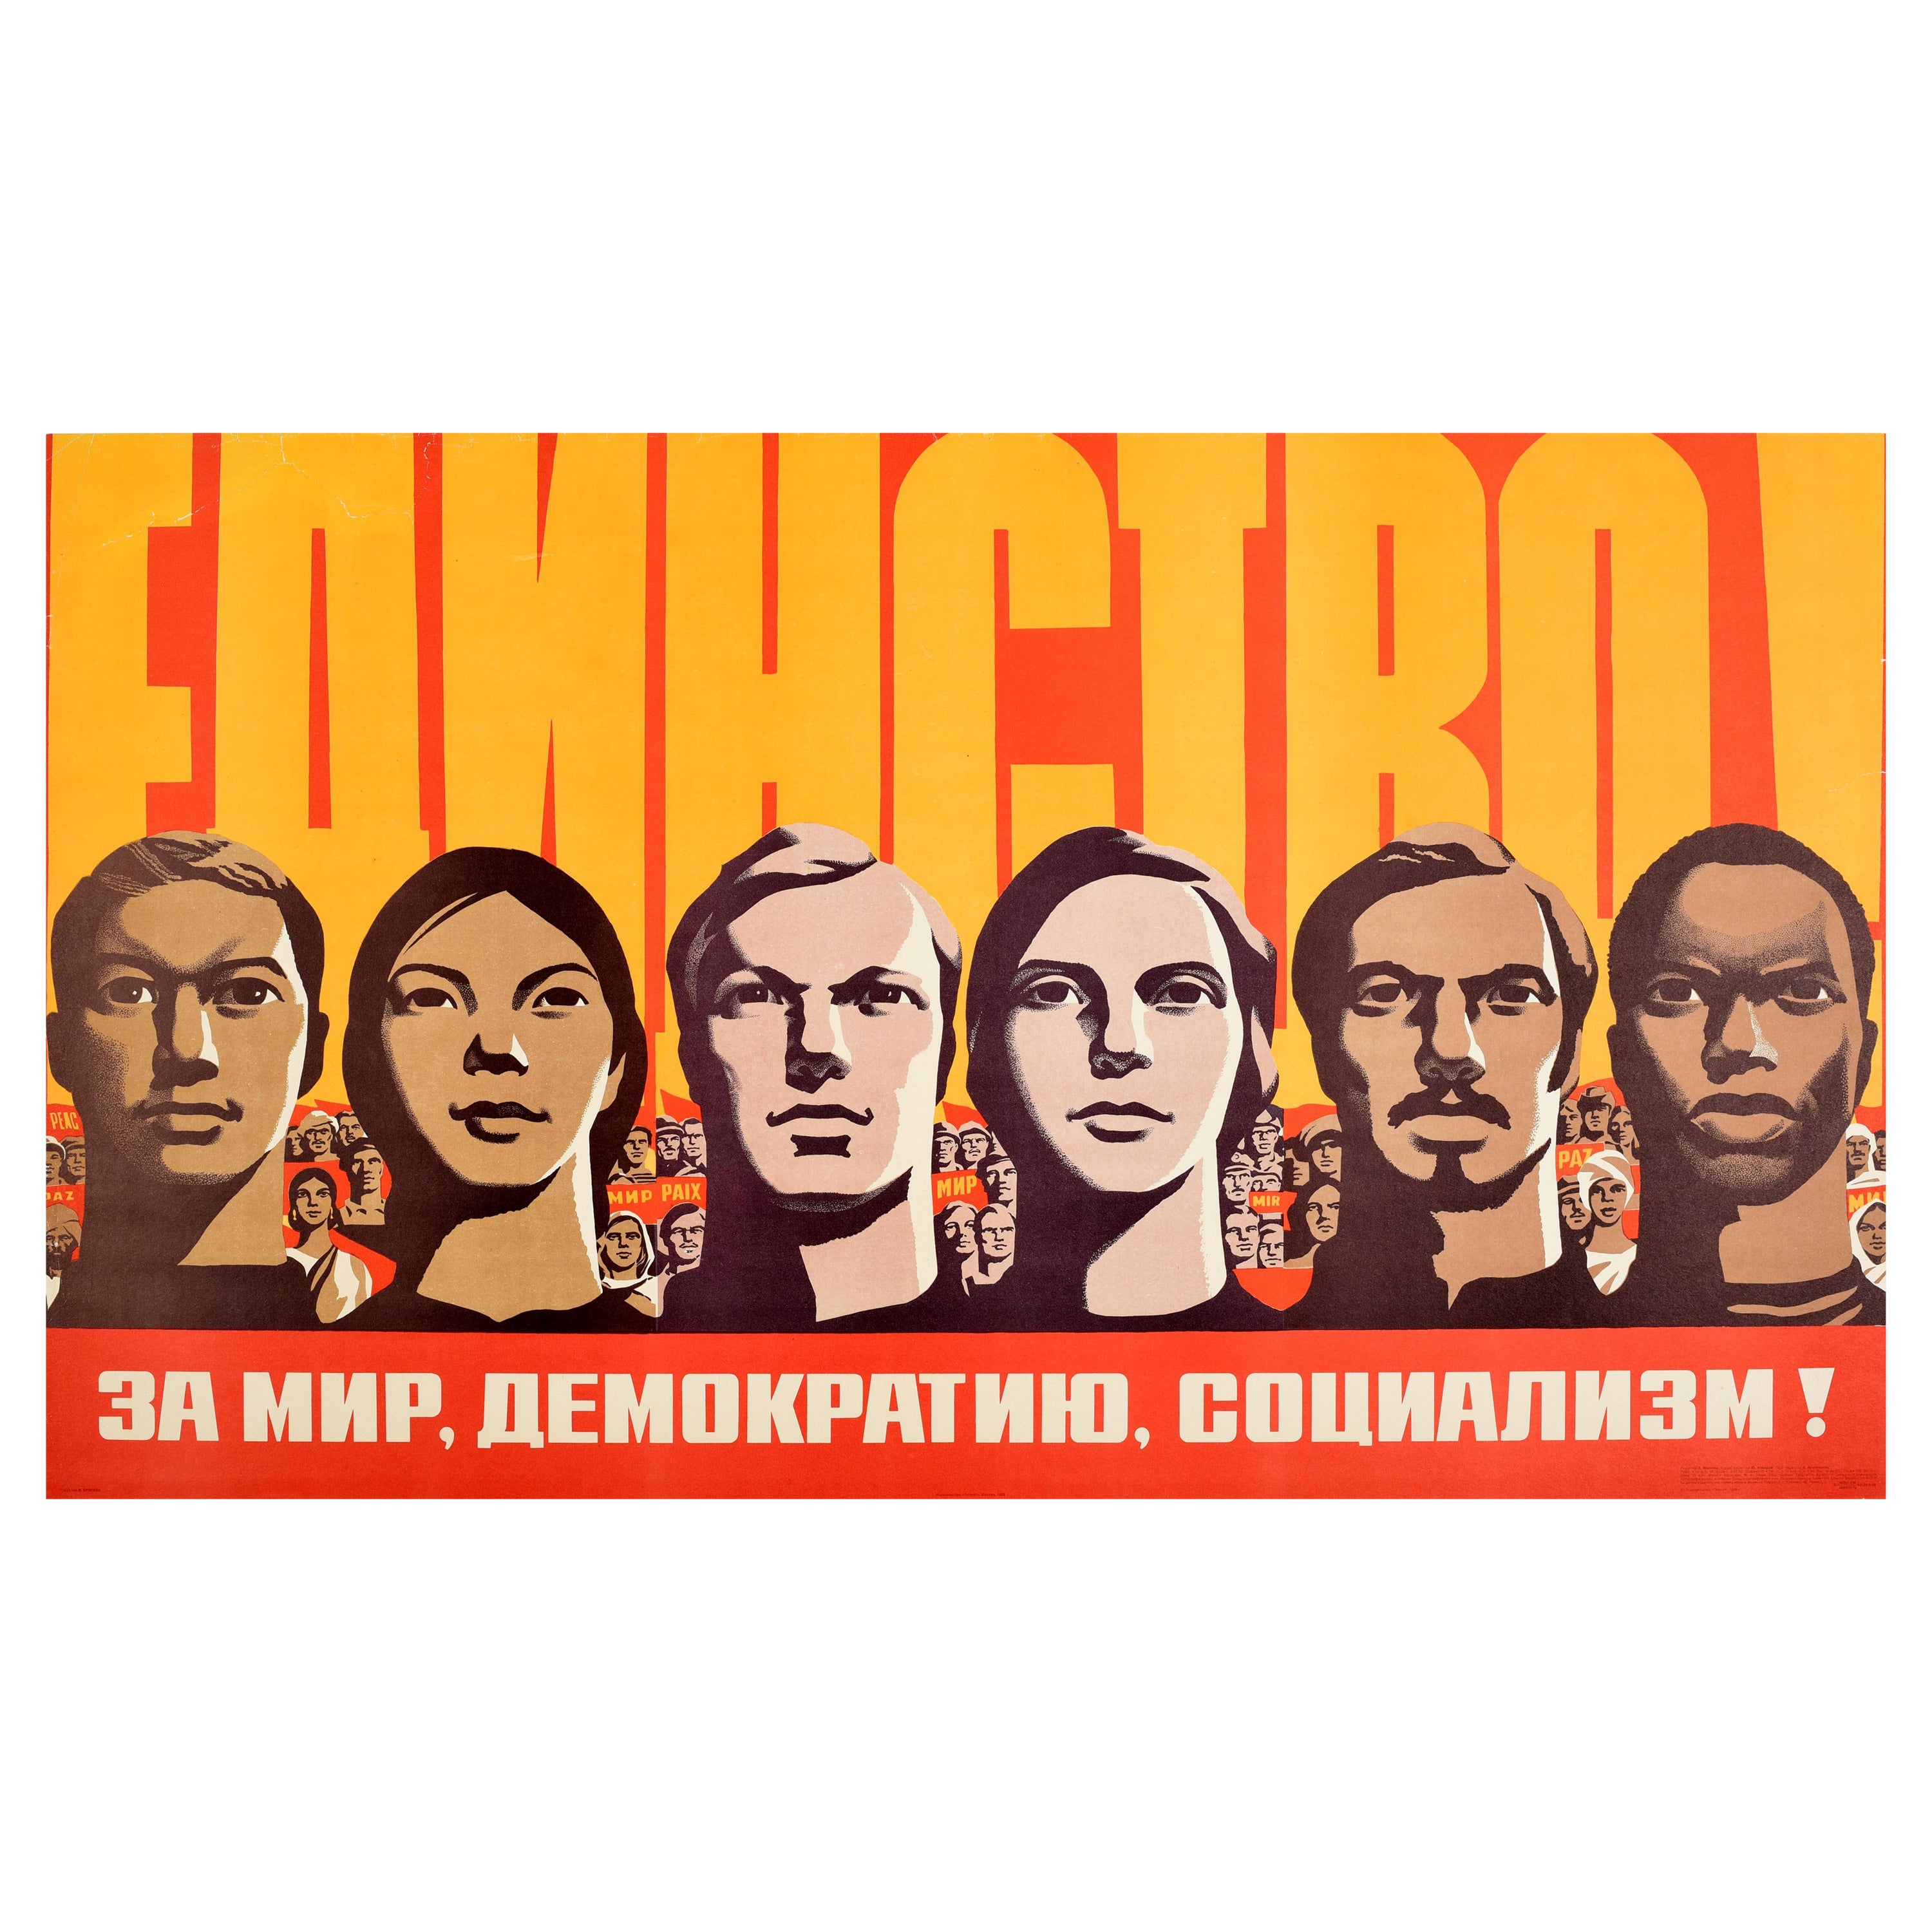 Original Vintage Poster International Unity For Peace Democracy Socialism USSR